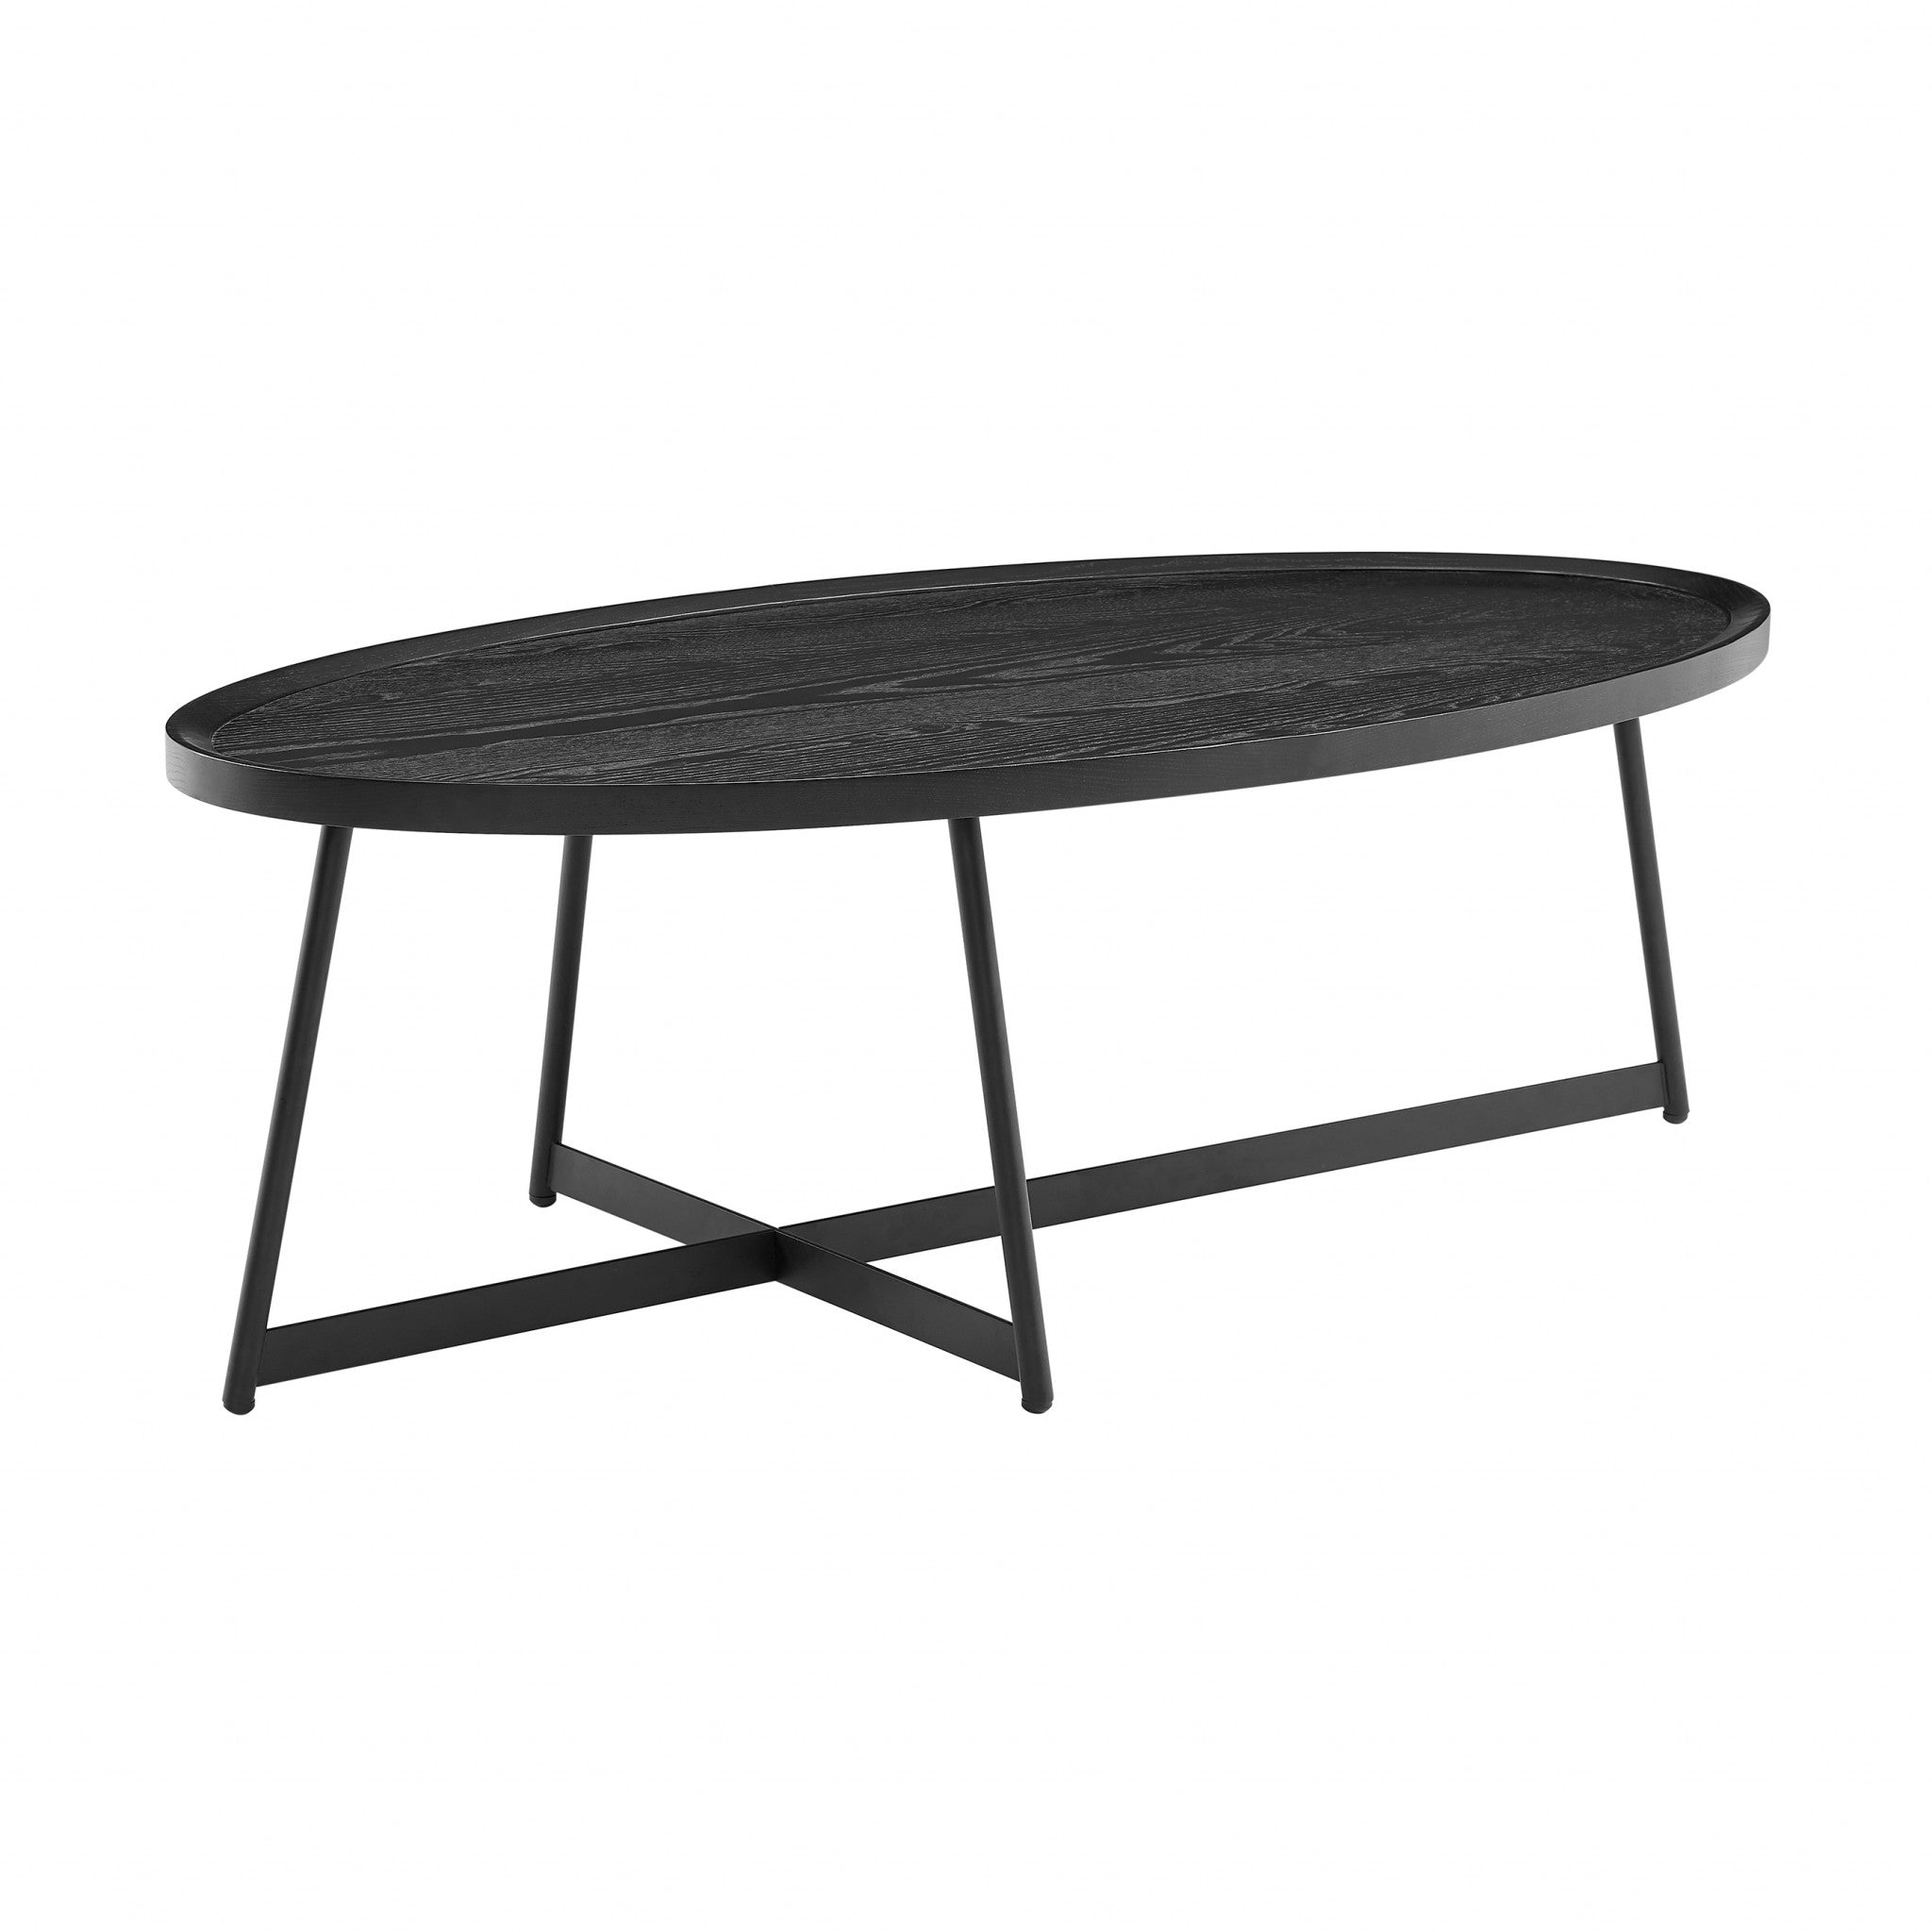 47" Black Metal Oval Coffee Table